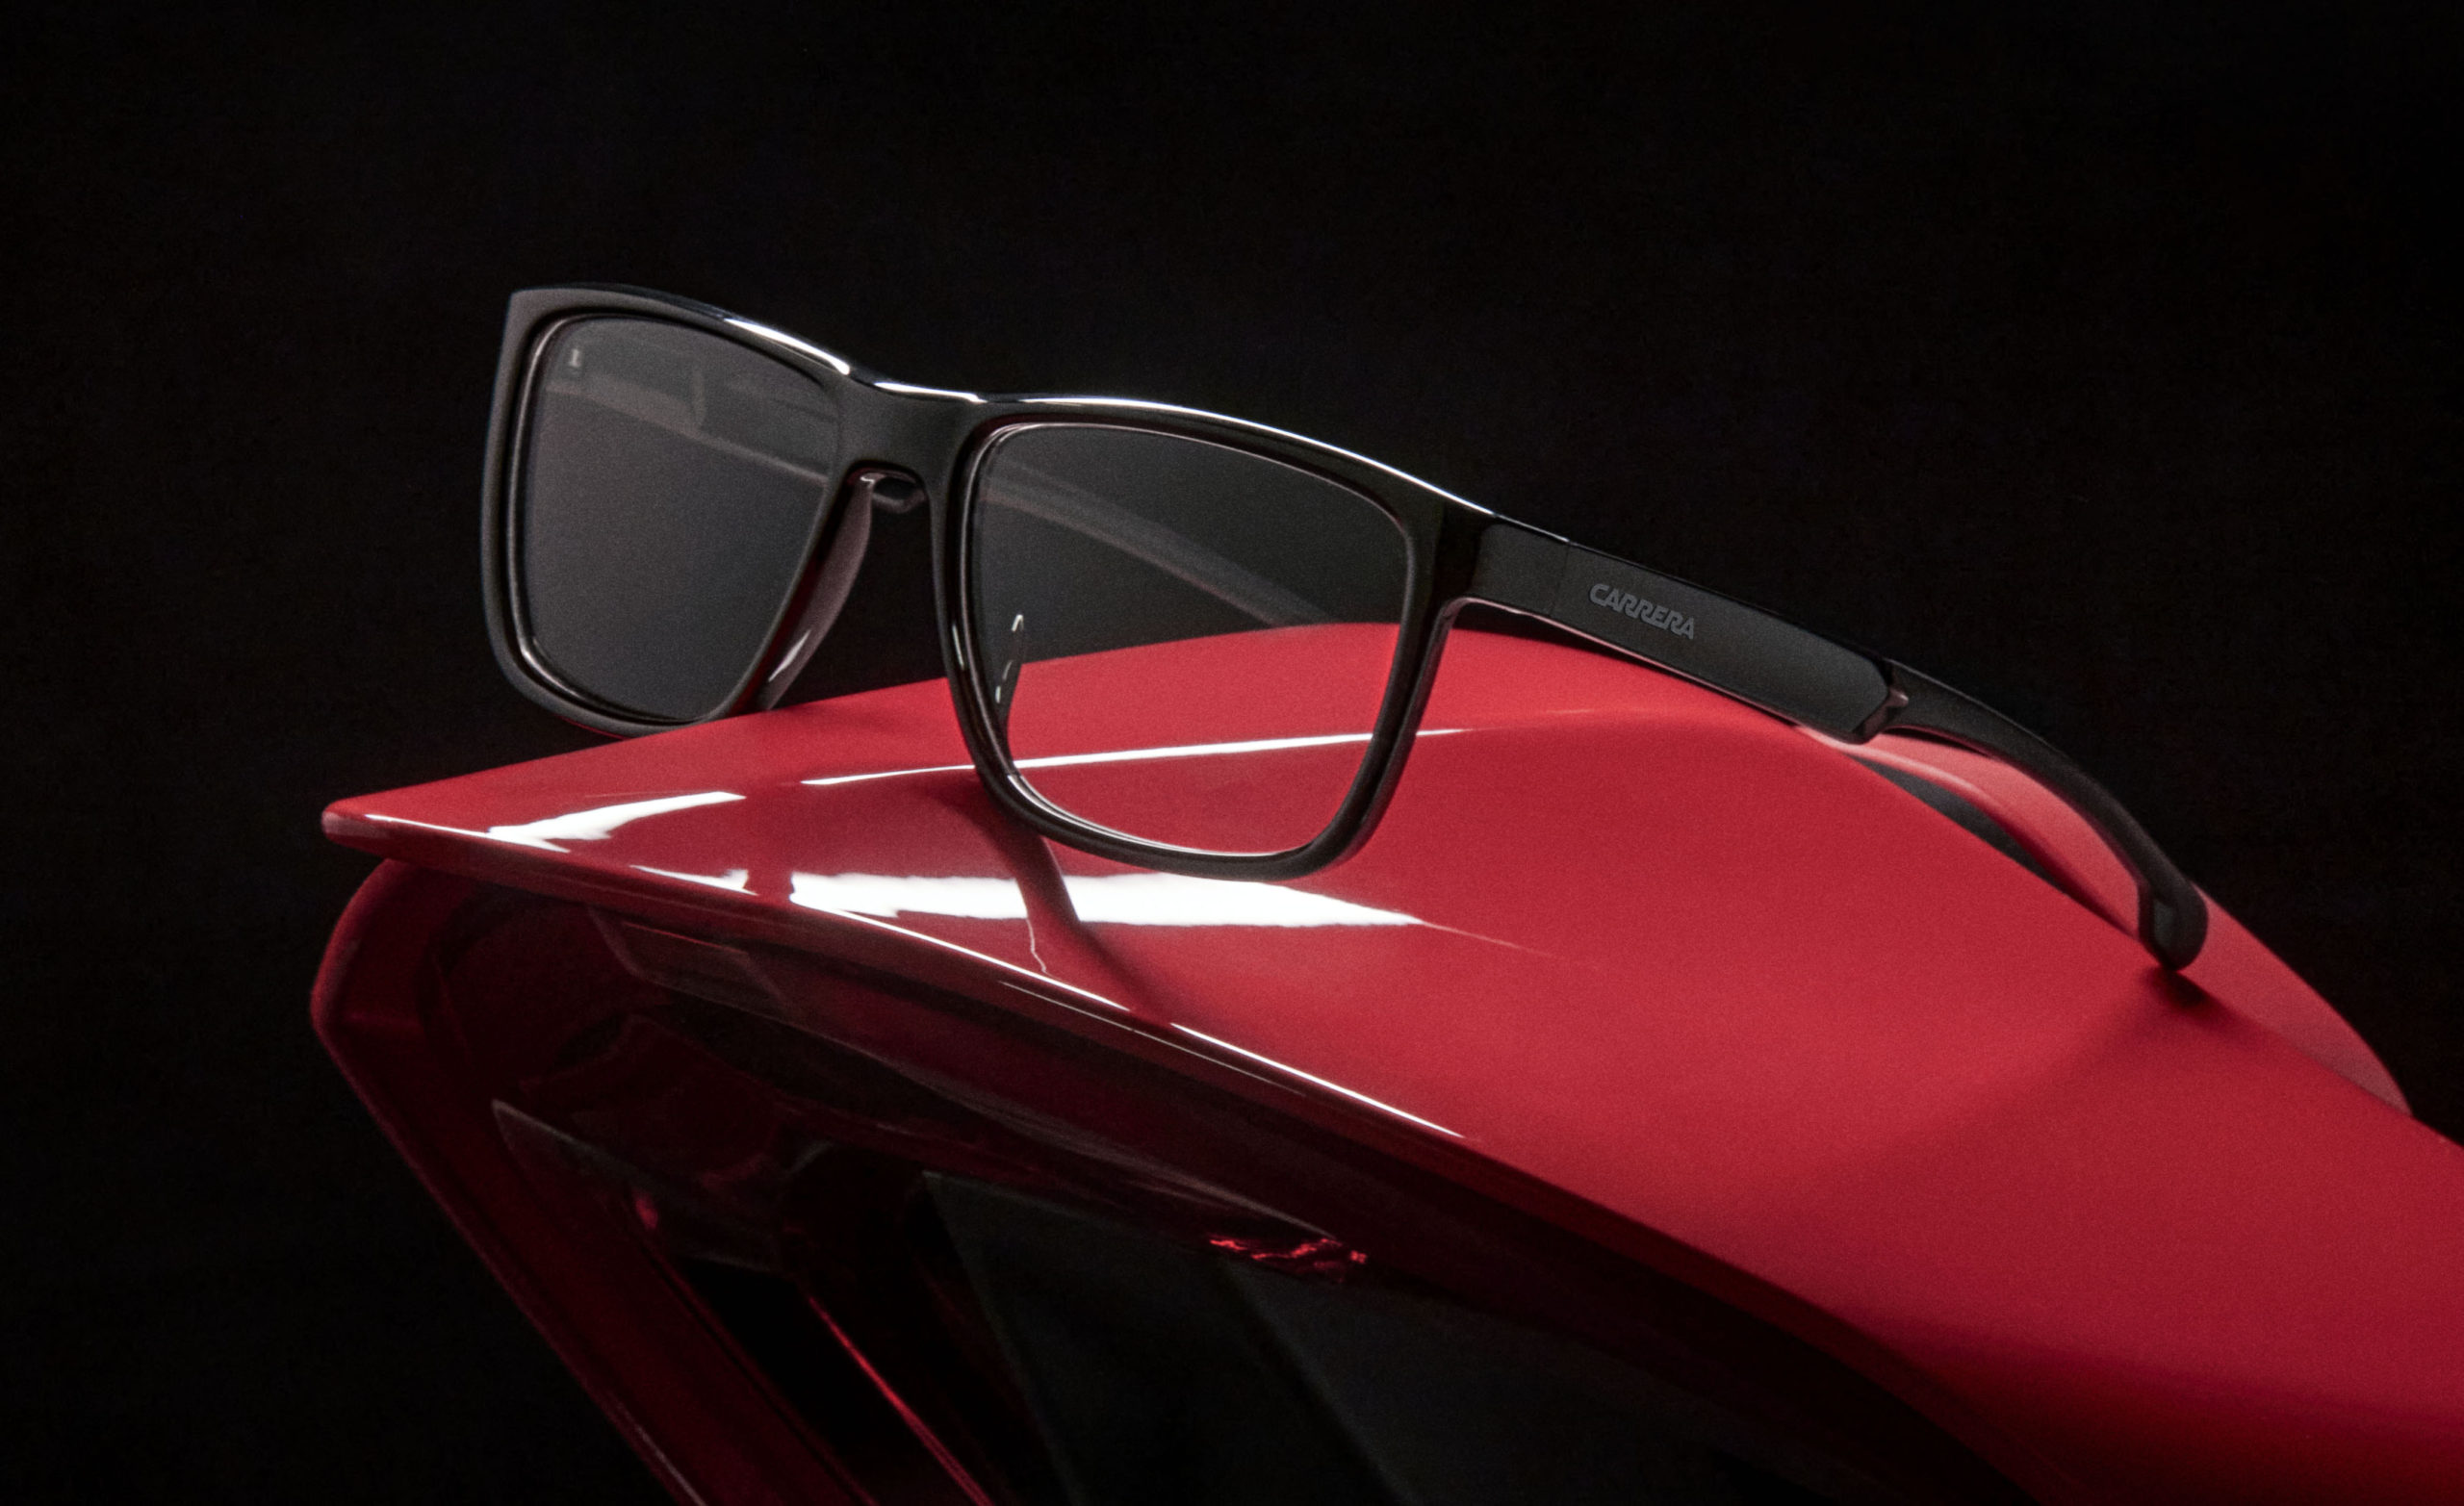 Introducing the Carrera|Ducati Eyewear Collection